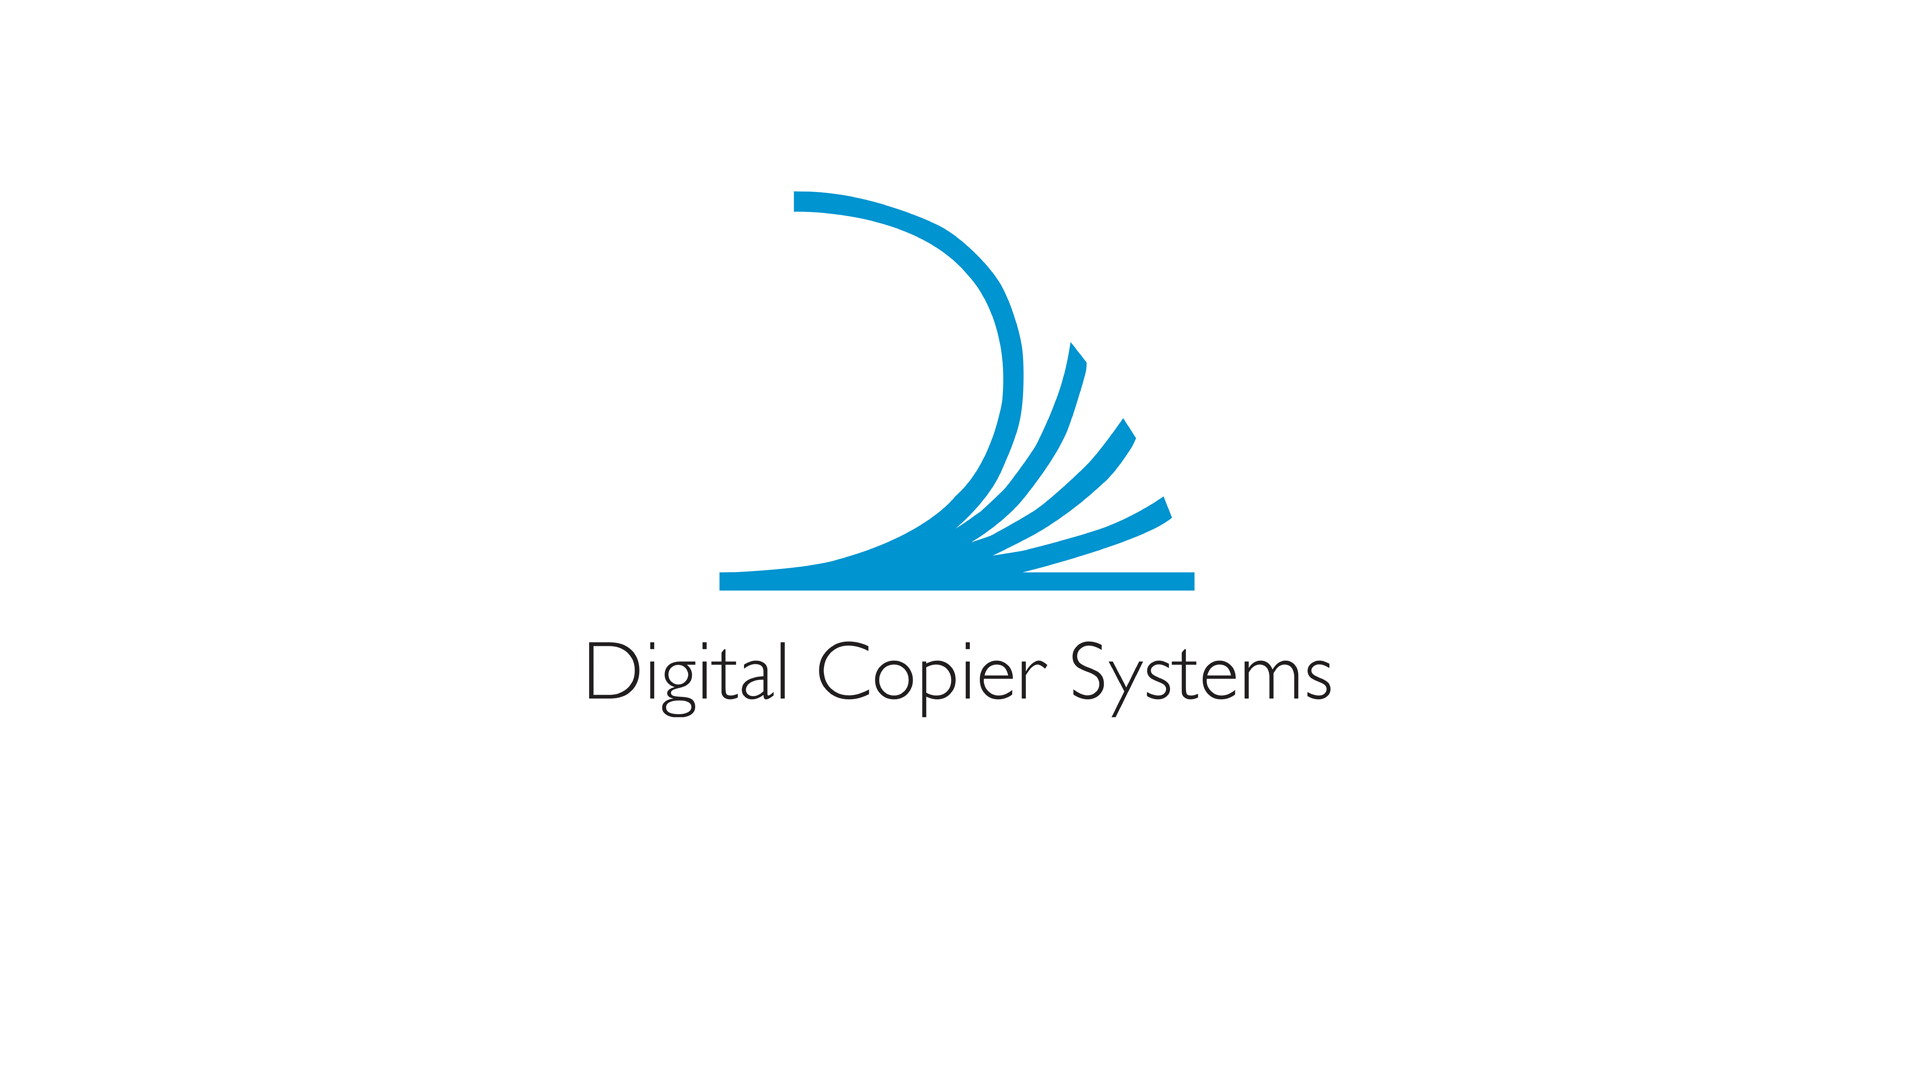 Photocopier Logo - Konica Minolta Partner East Anglia | Digital Copier Systems Services ...